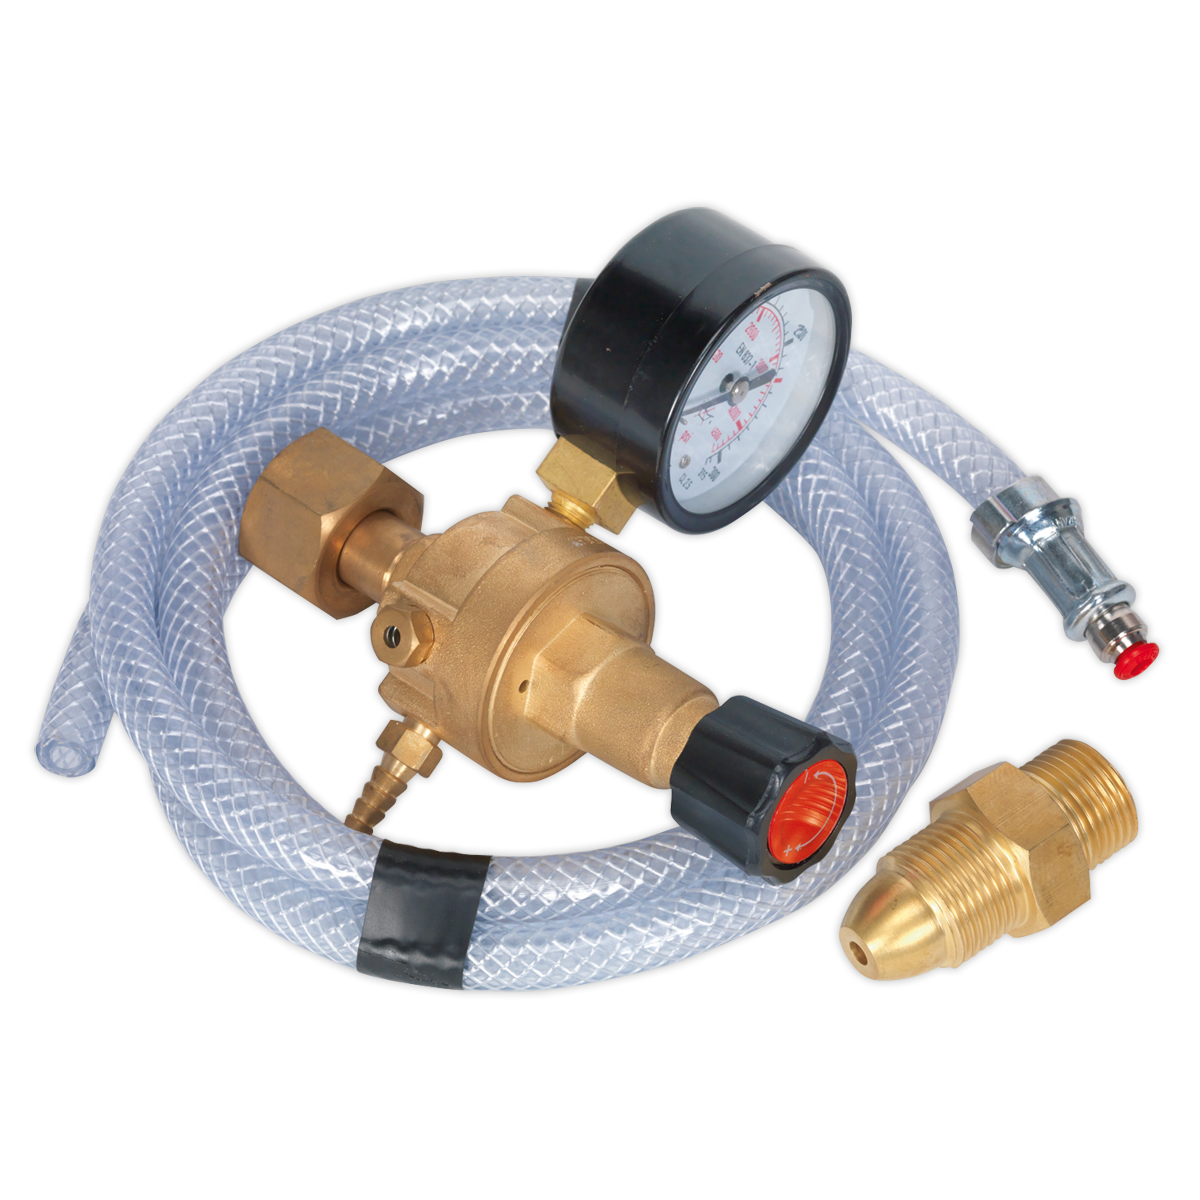 Sealey MIG Gas Regulator Kit 1-Gauge Regulator Industrial